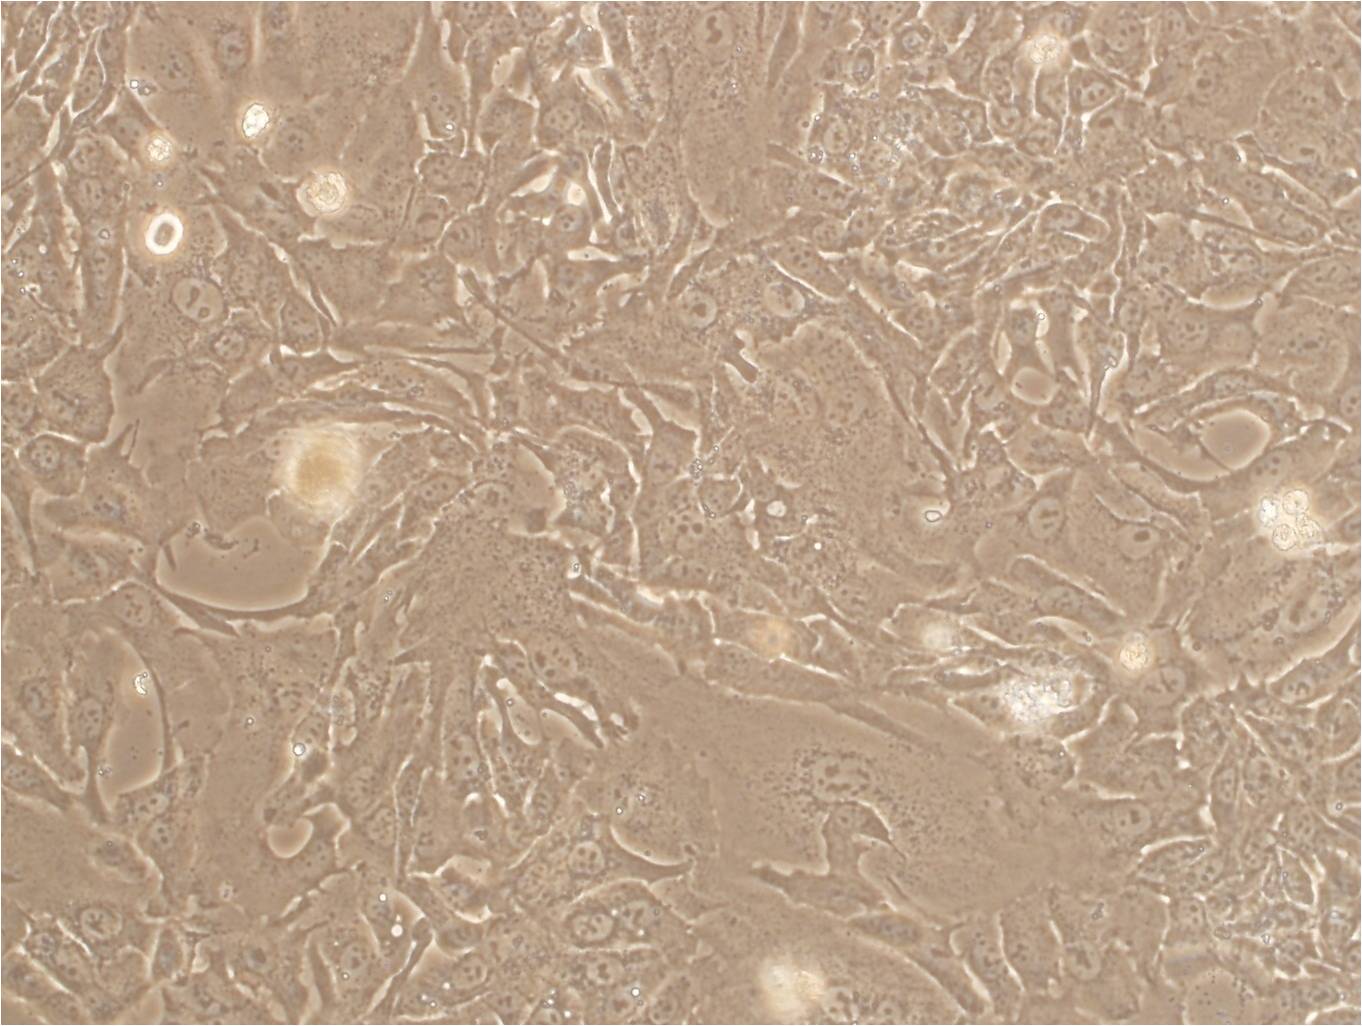 MCF-10A Cells(赠送Str鉴定报告)|人正常乳腺上皮细胞,MCF-10A Cells